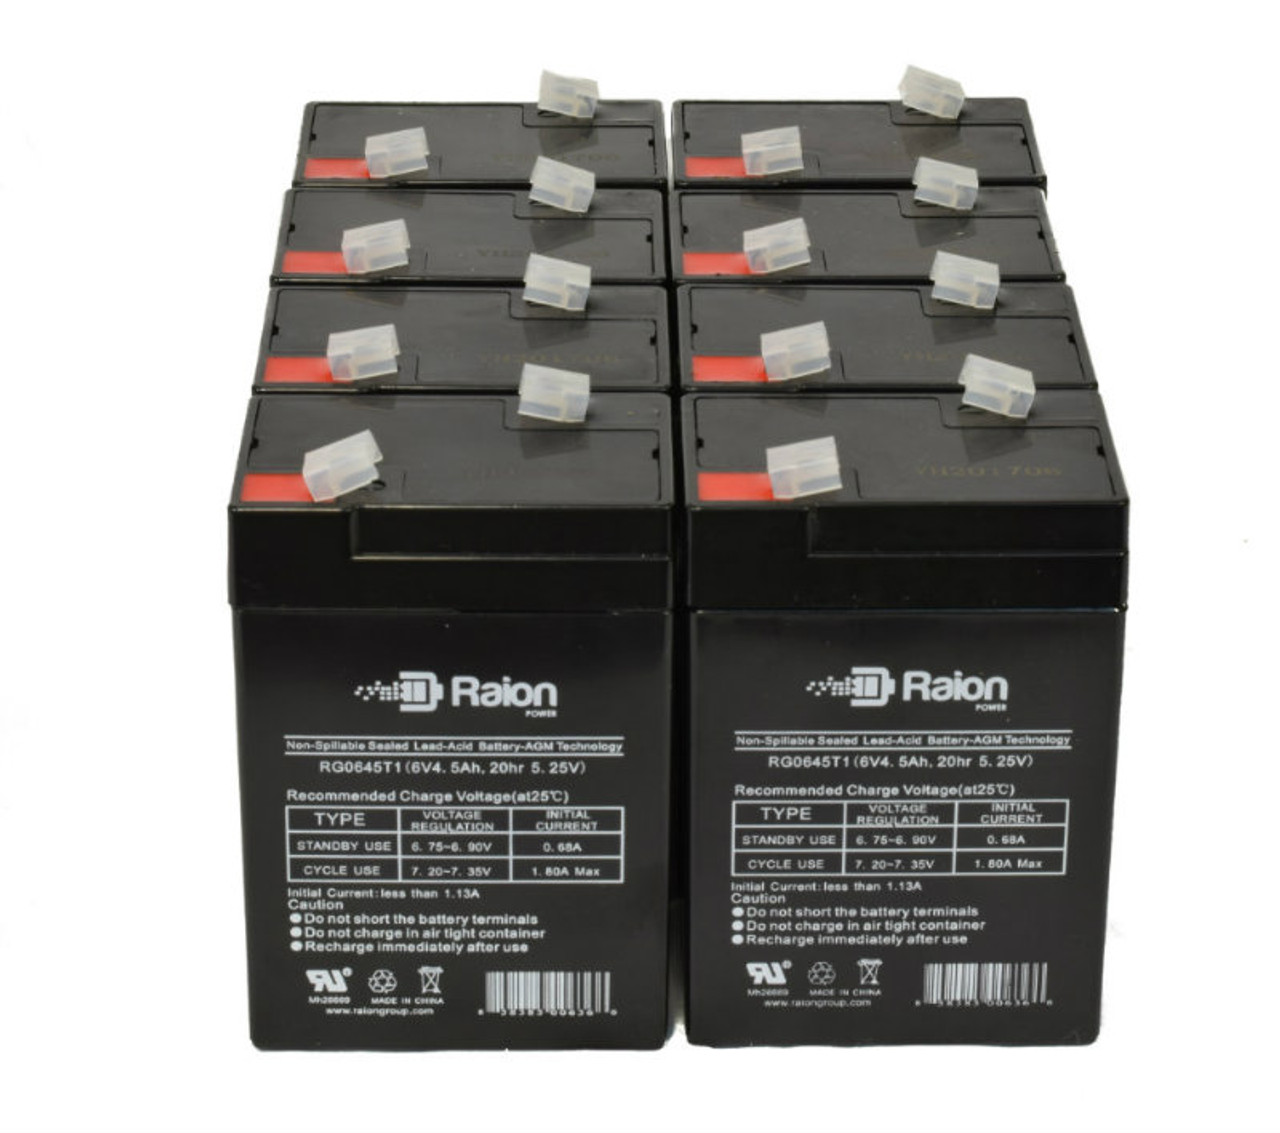 Raion Power 6V 4.5Ah Replacement Emergency Light Battery for Light Alarms 5E15BK - 8 Pack